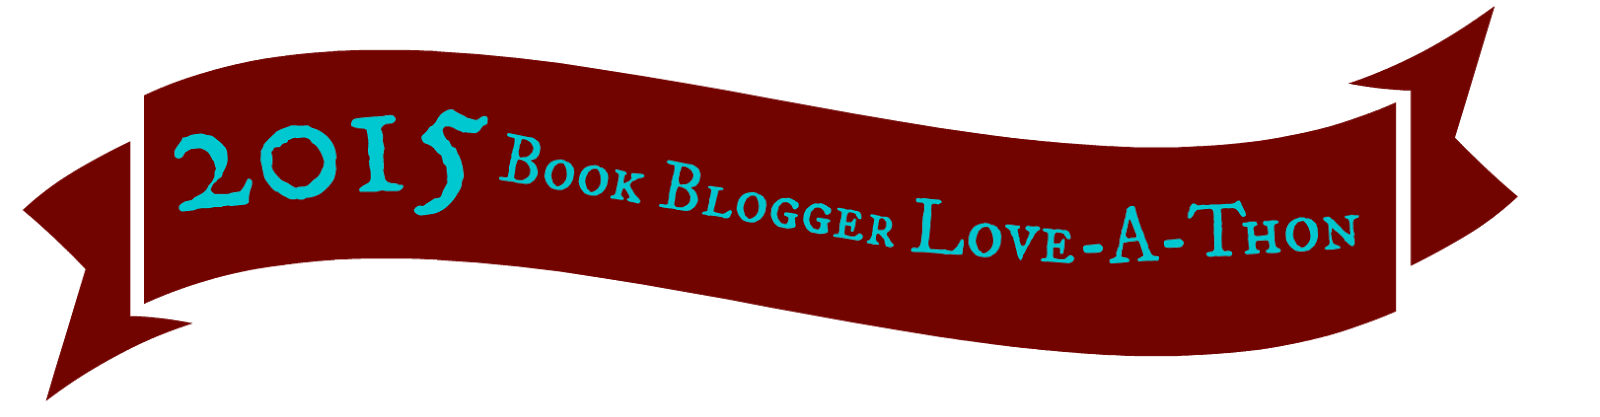 2015 Book Blogger Love-a-Thon